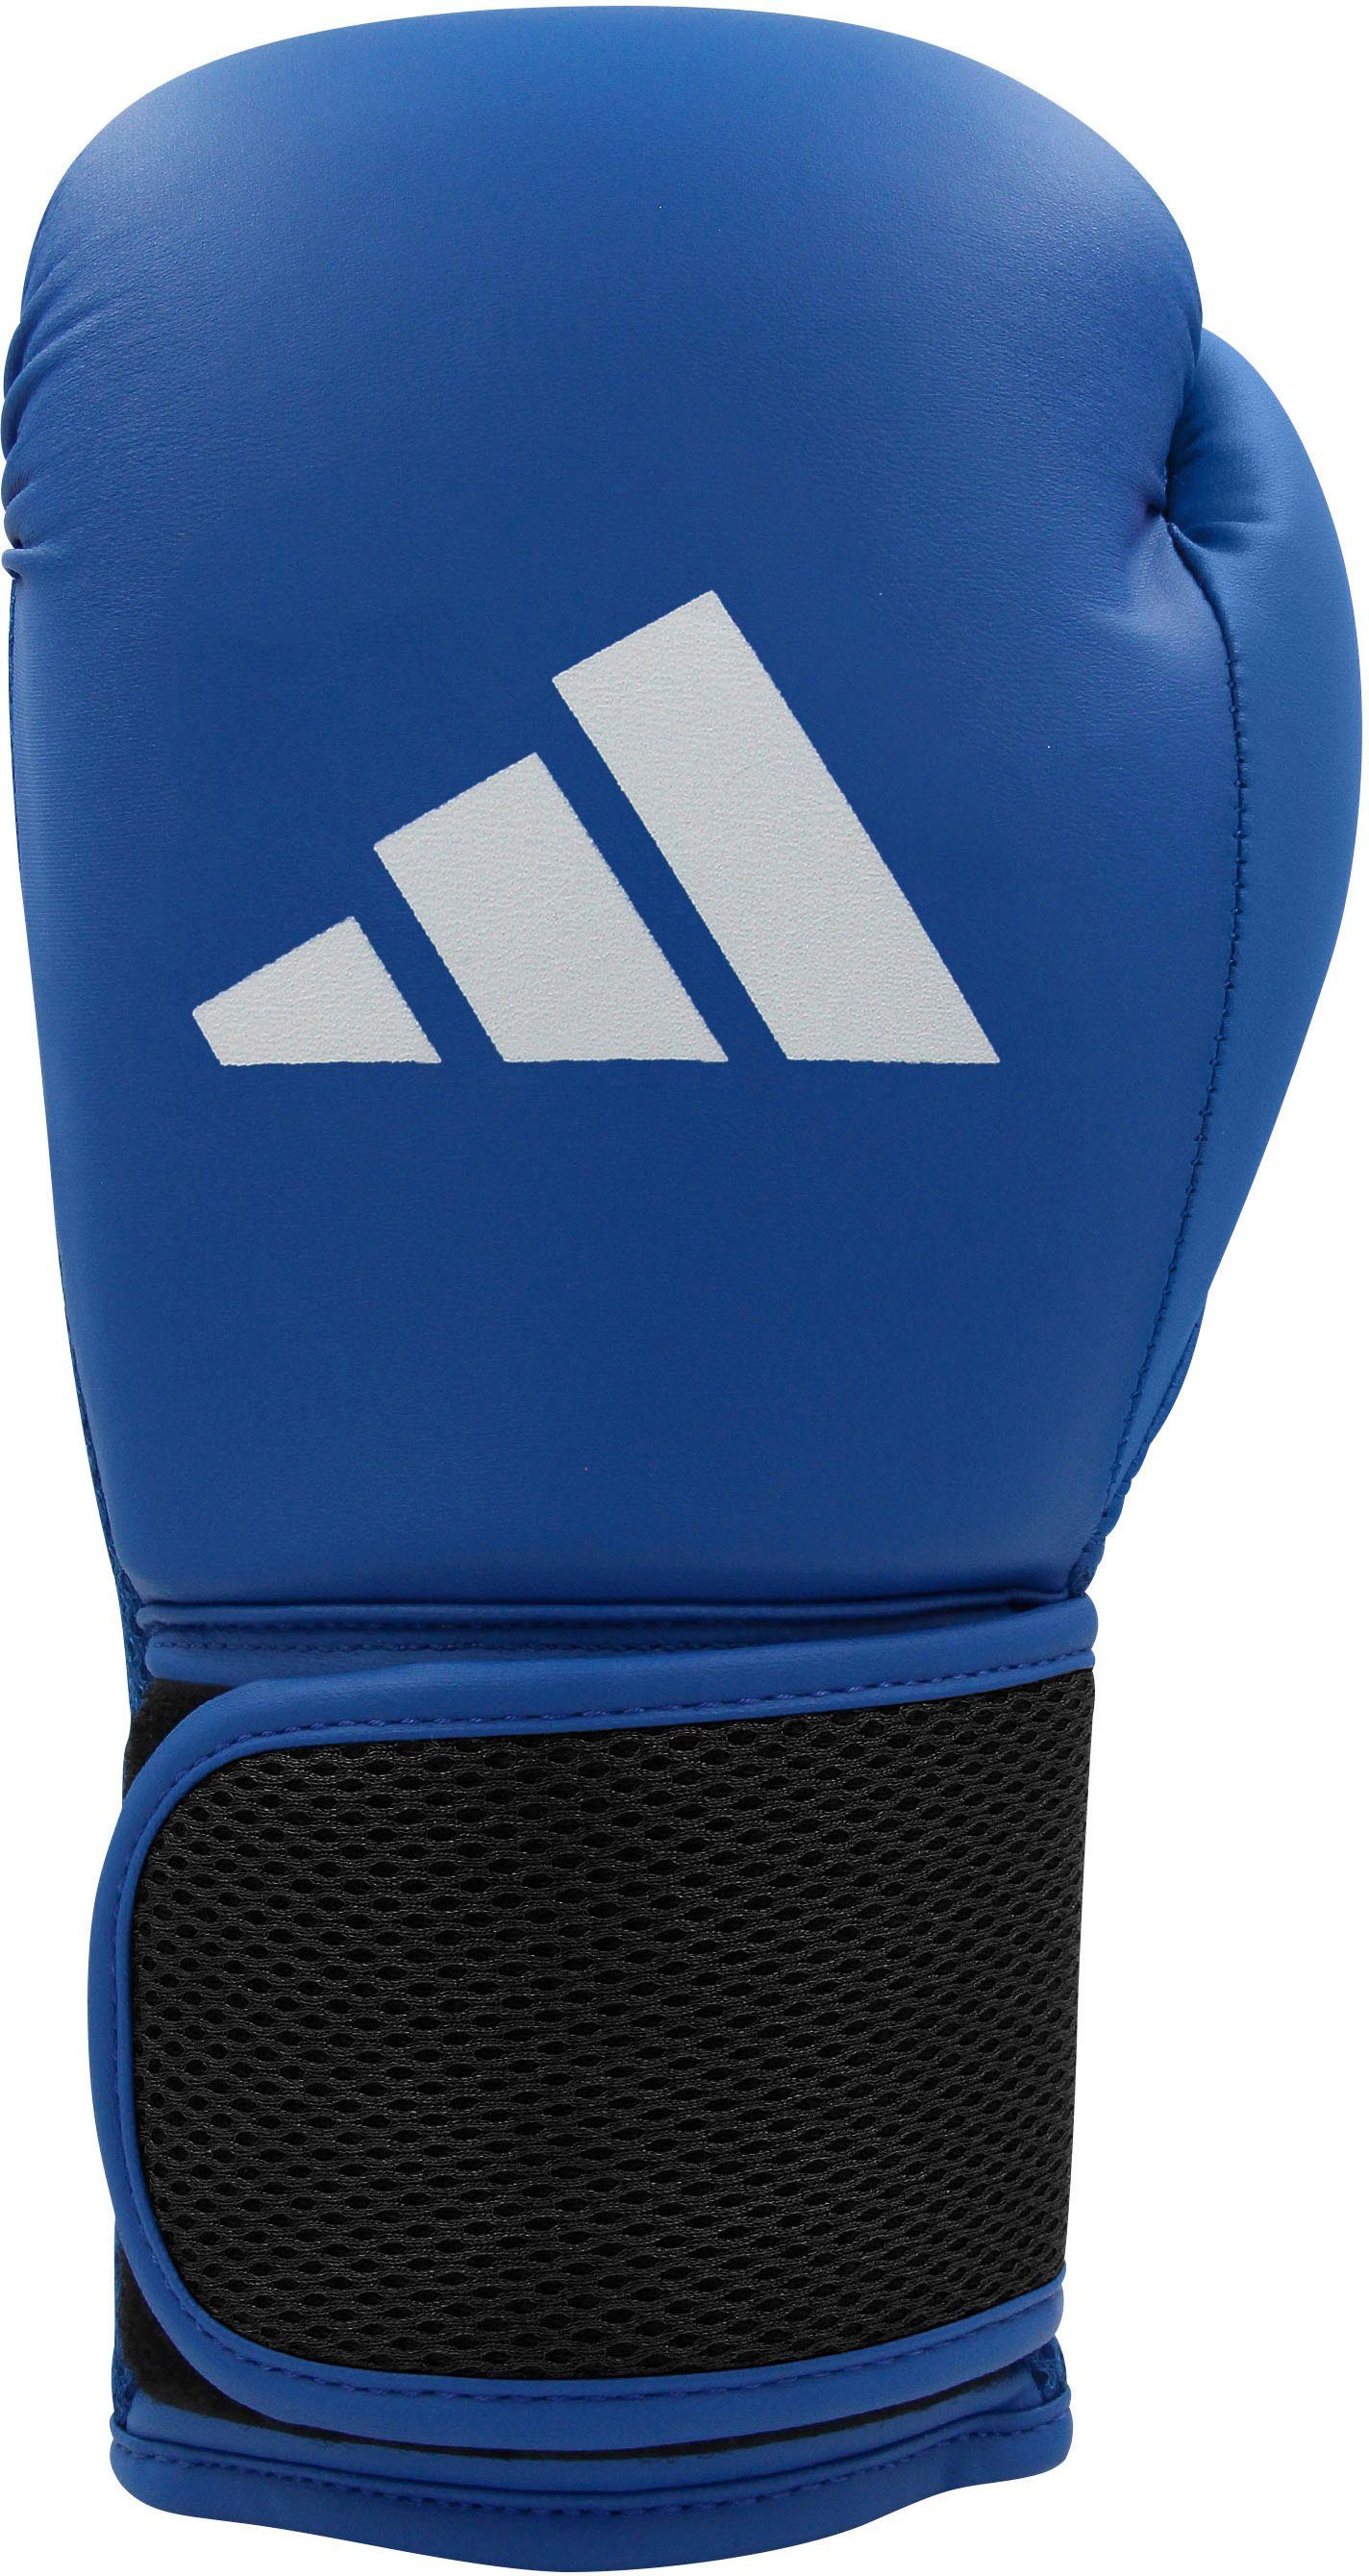 Boxhandschuhe blau Performance adidas